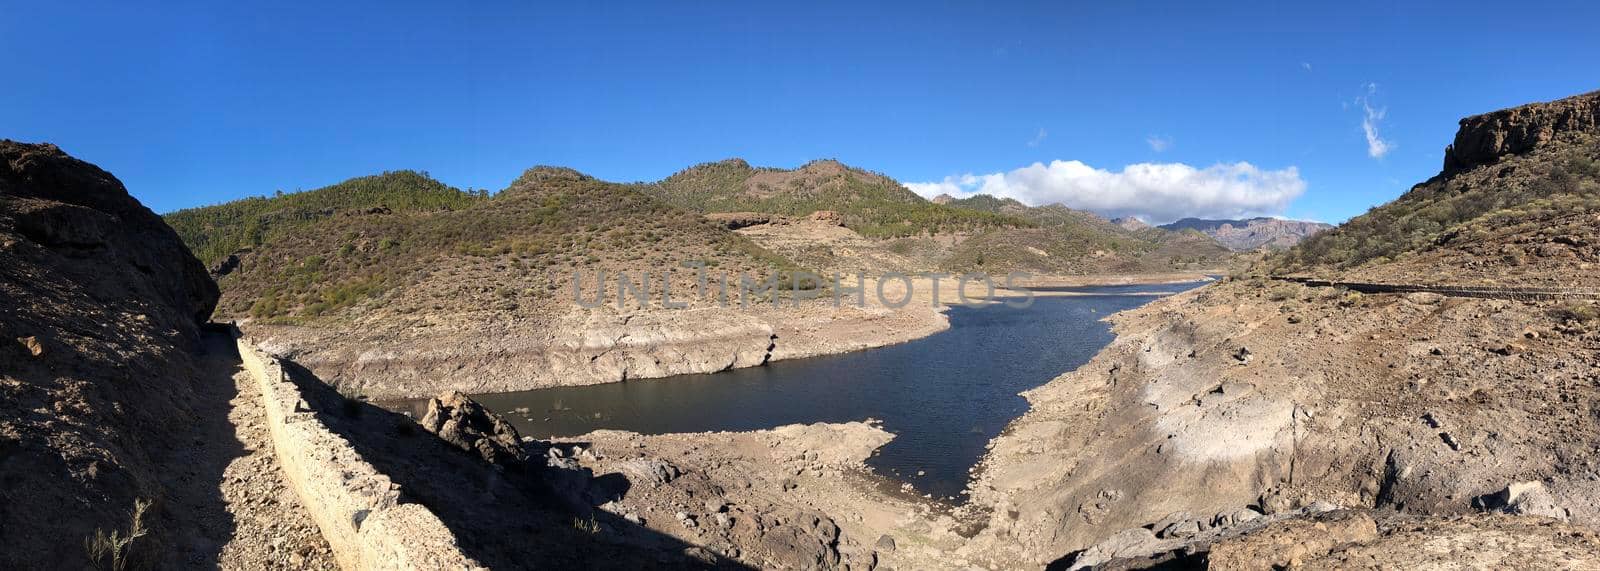 Panoramic scenery around Las Ninas Reservoir  by traveltelly